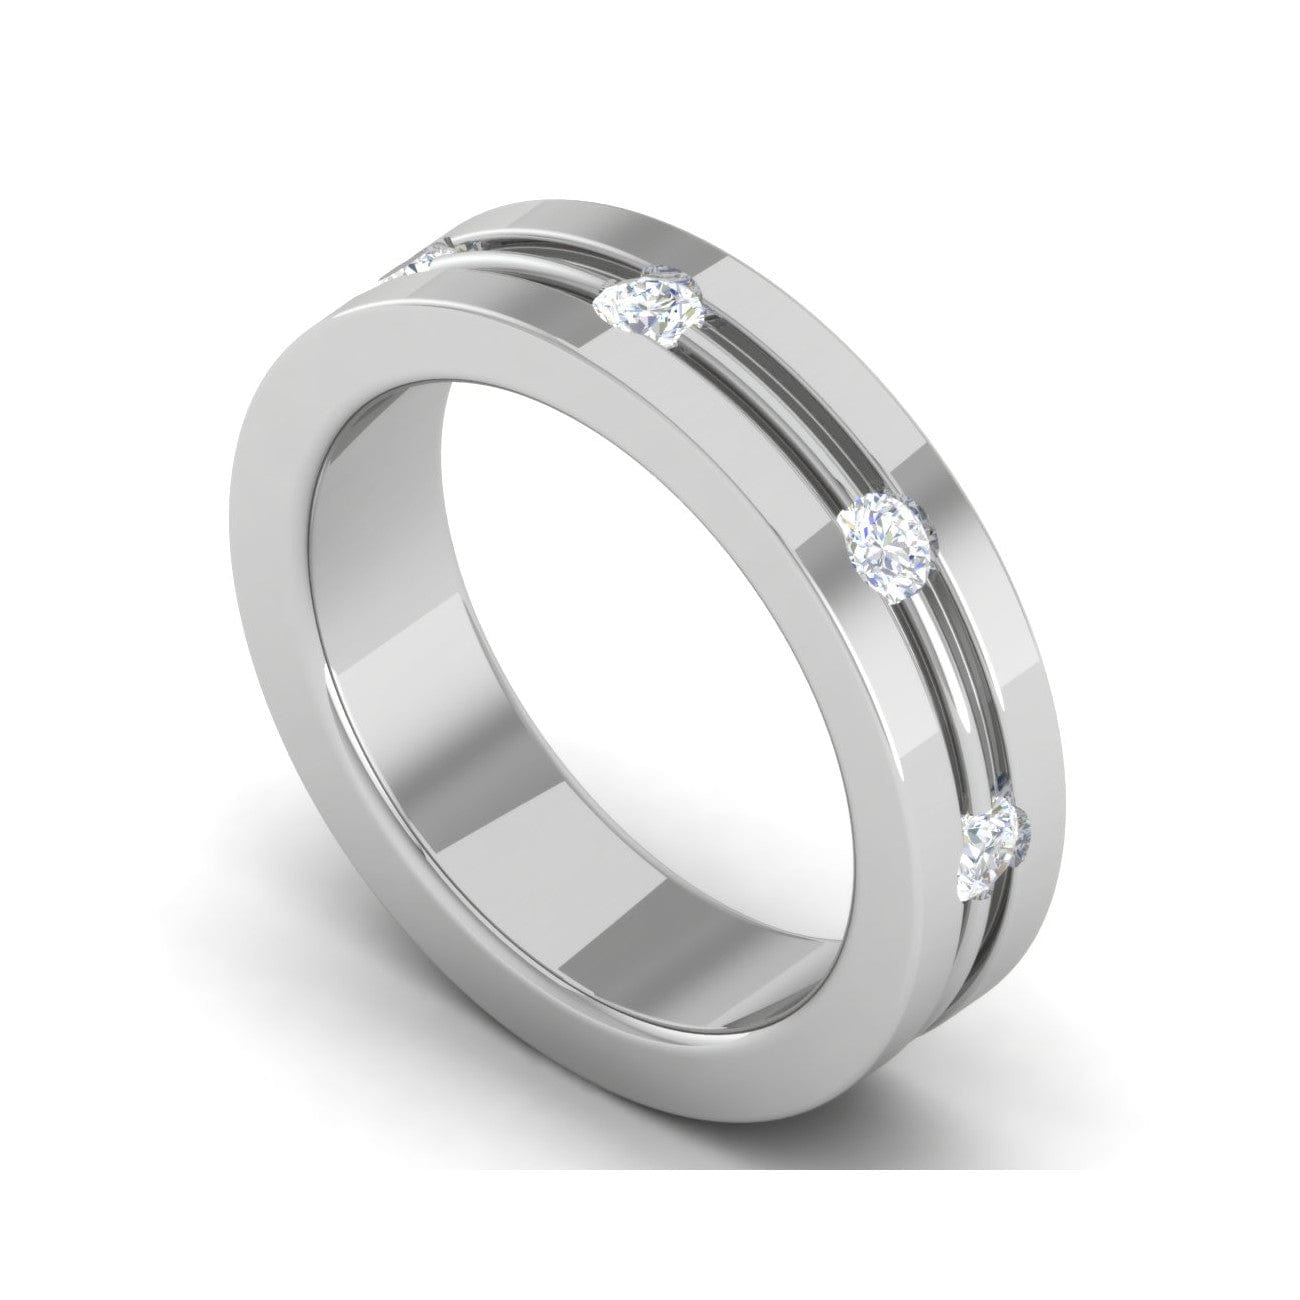 Buy TANISHQ 950 Platinum Diamond Ring 16.40 mm Online - Best Price TANISHQ  950 Platinum Diamond Ring 16.40 mm - Justdial Shop Online.